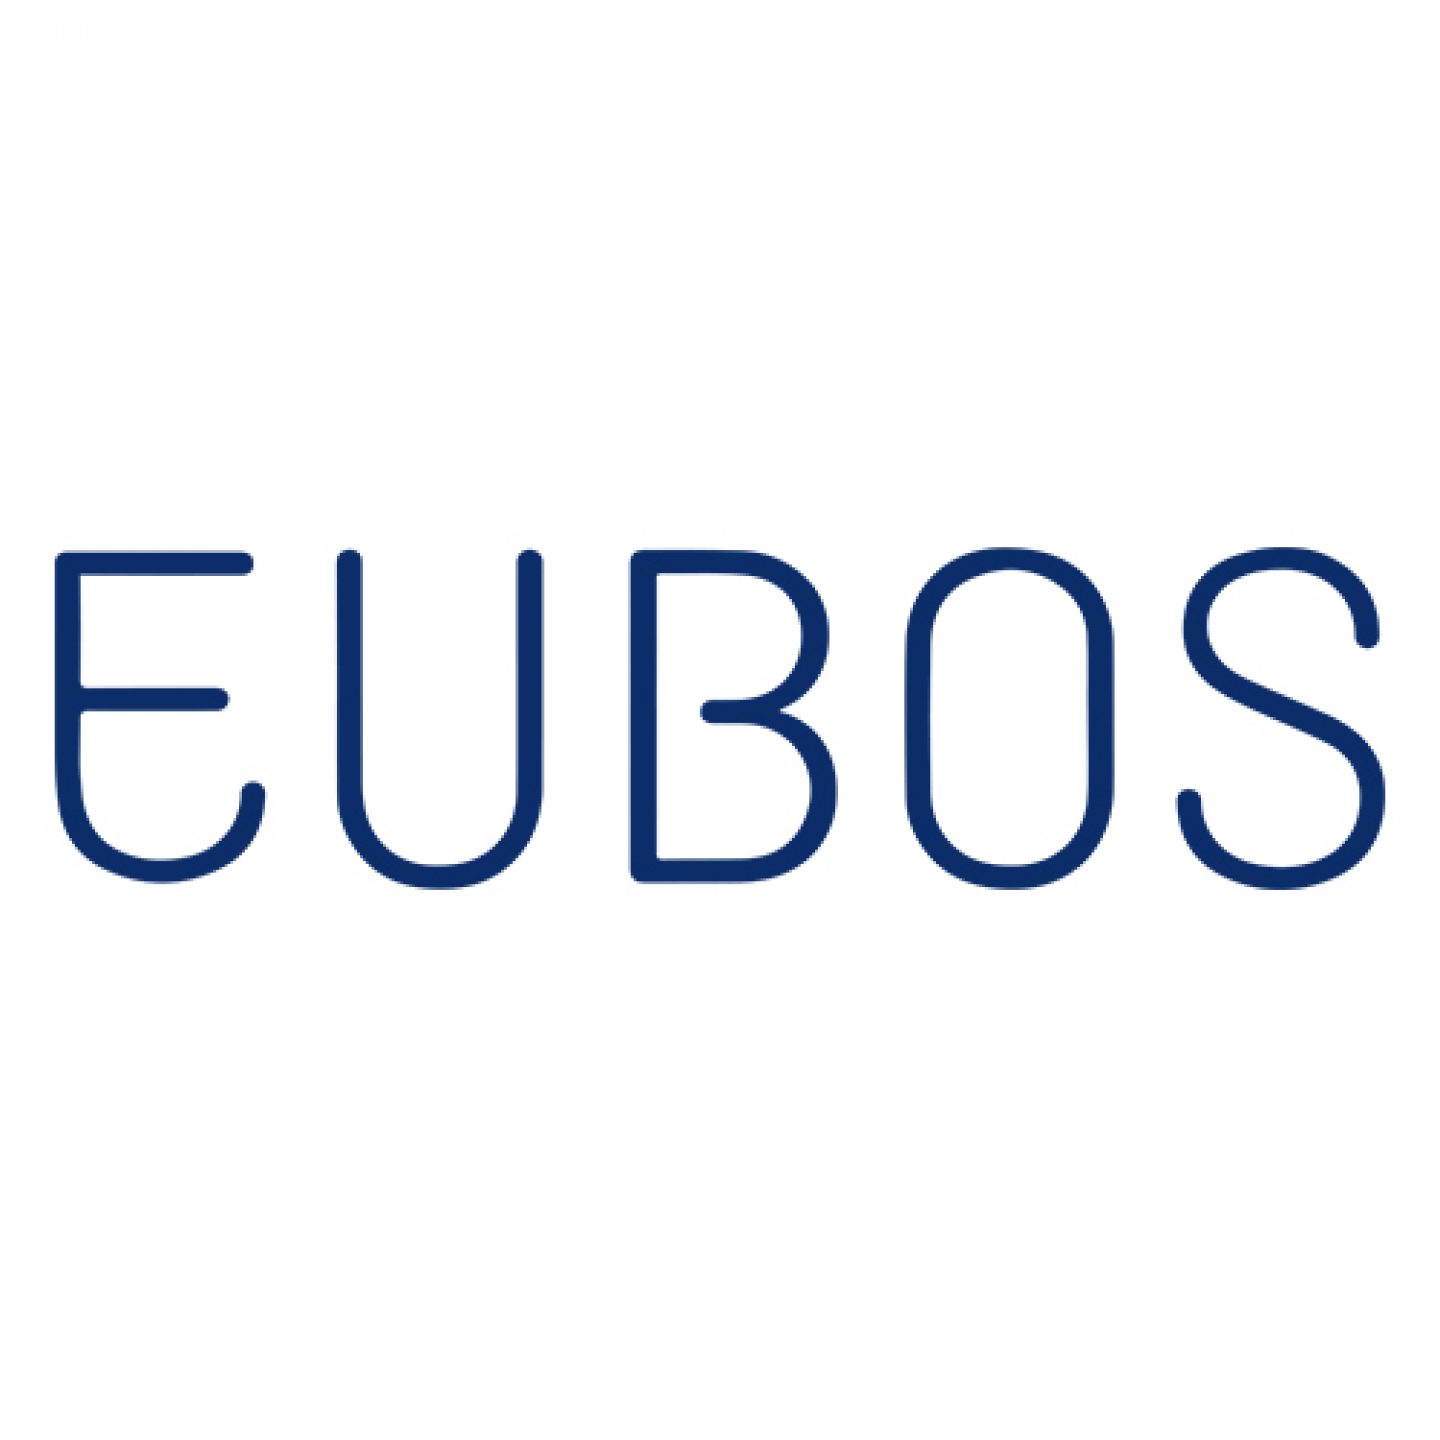 EEZ-Apotheke Marken Logo Eubos